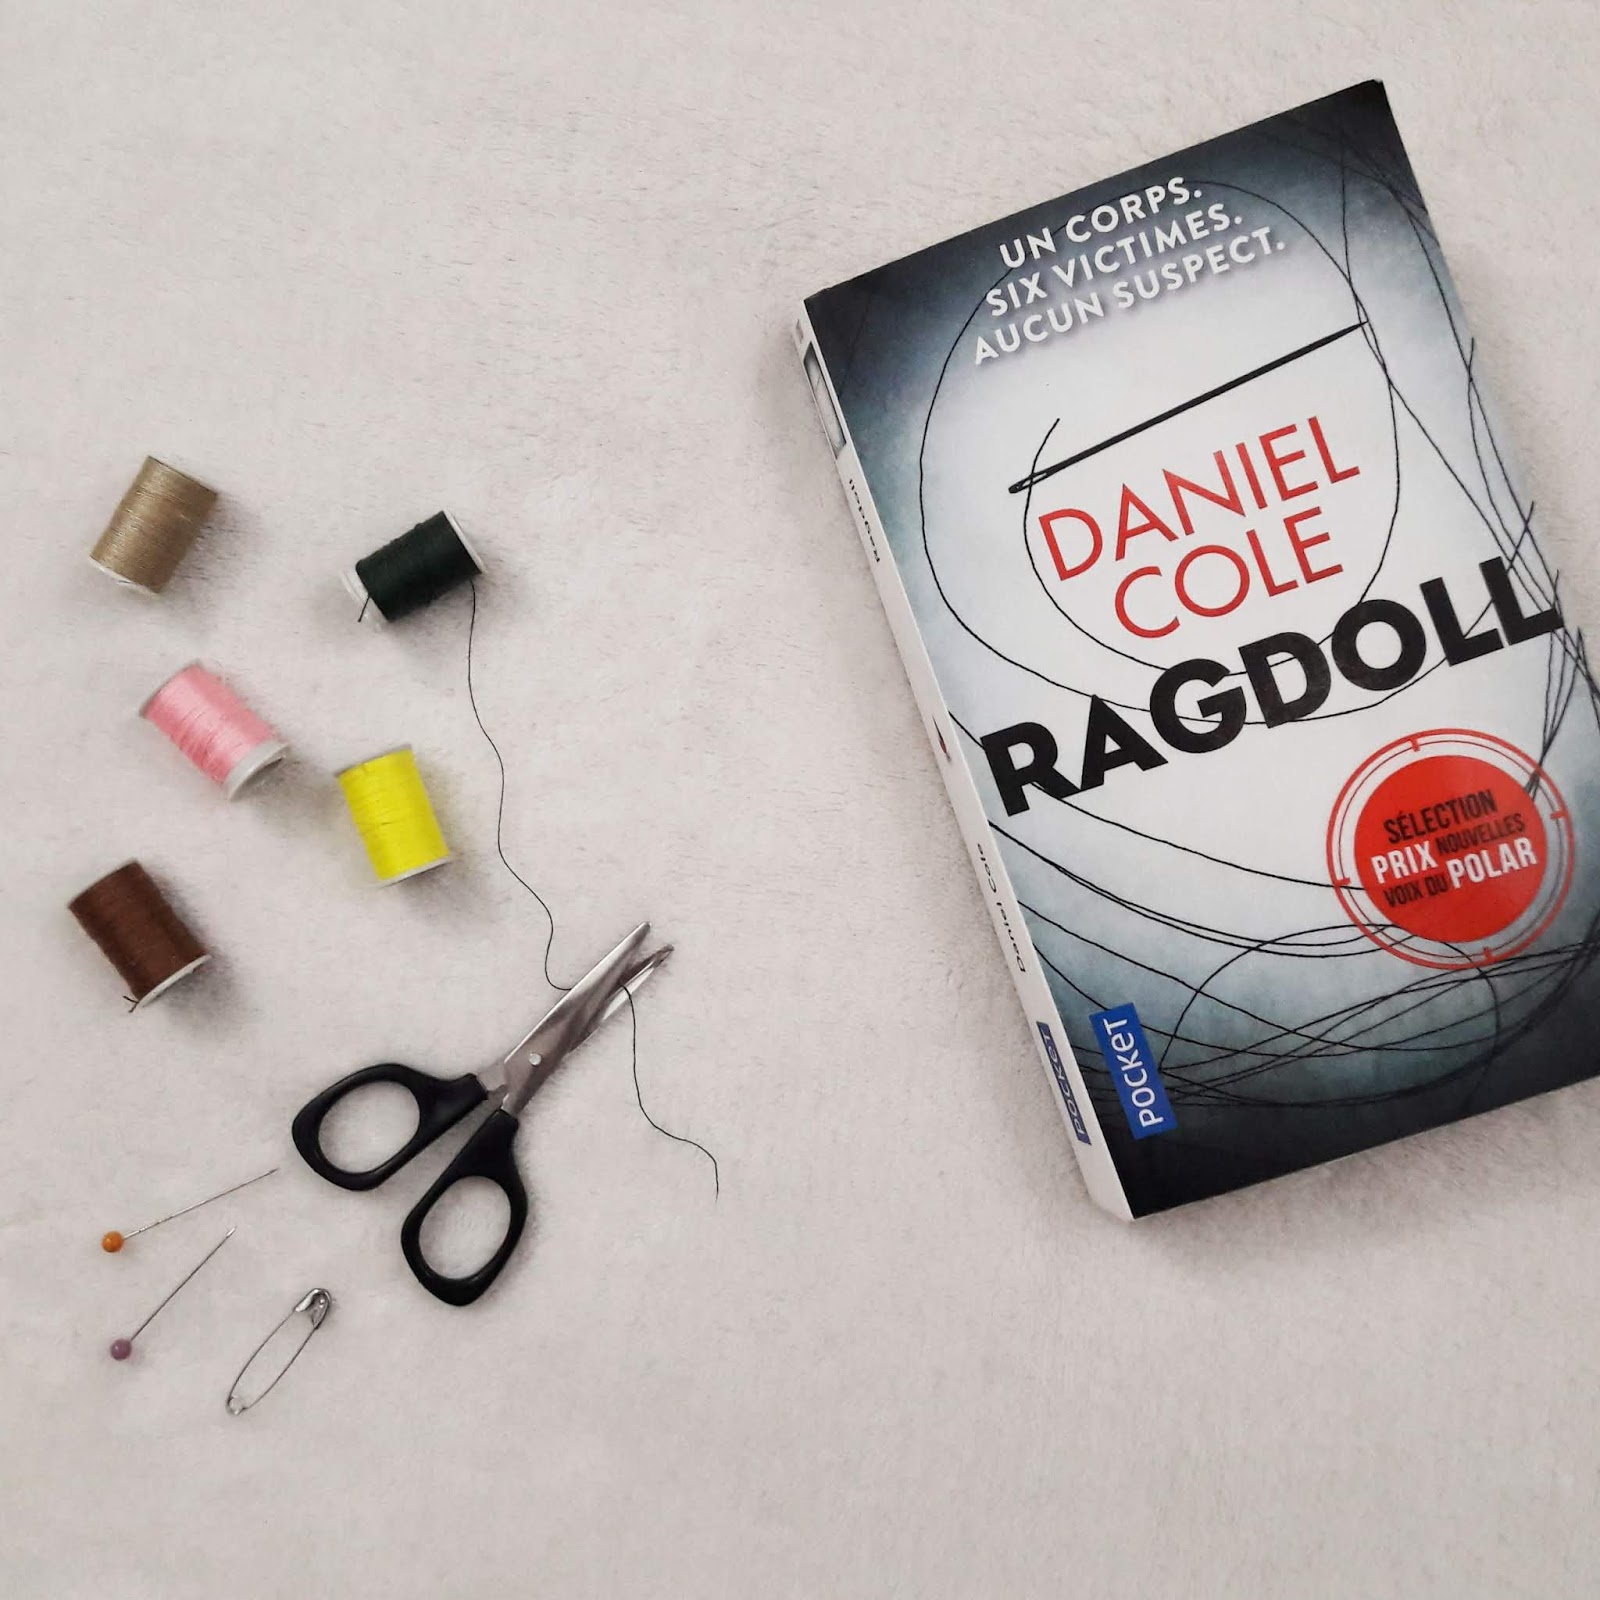 Ragdoll de Daniel Cole